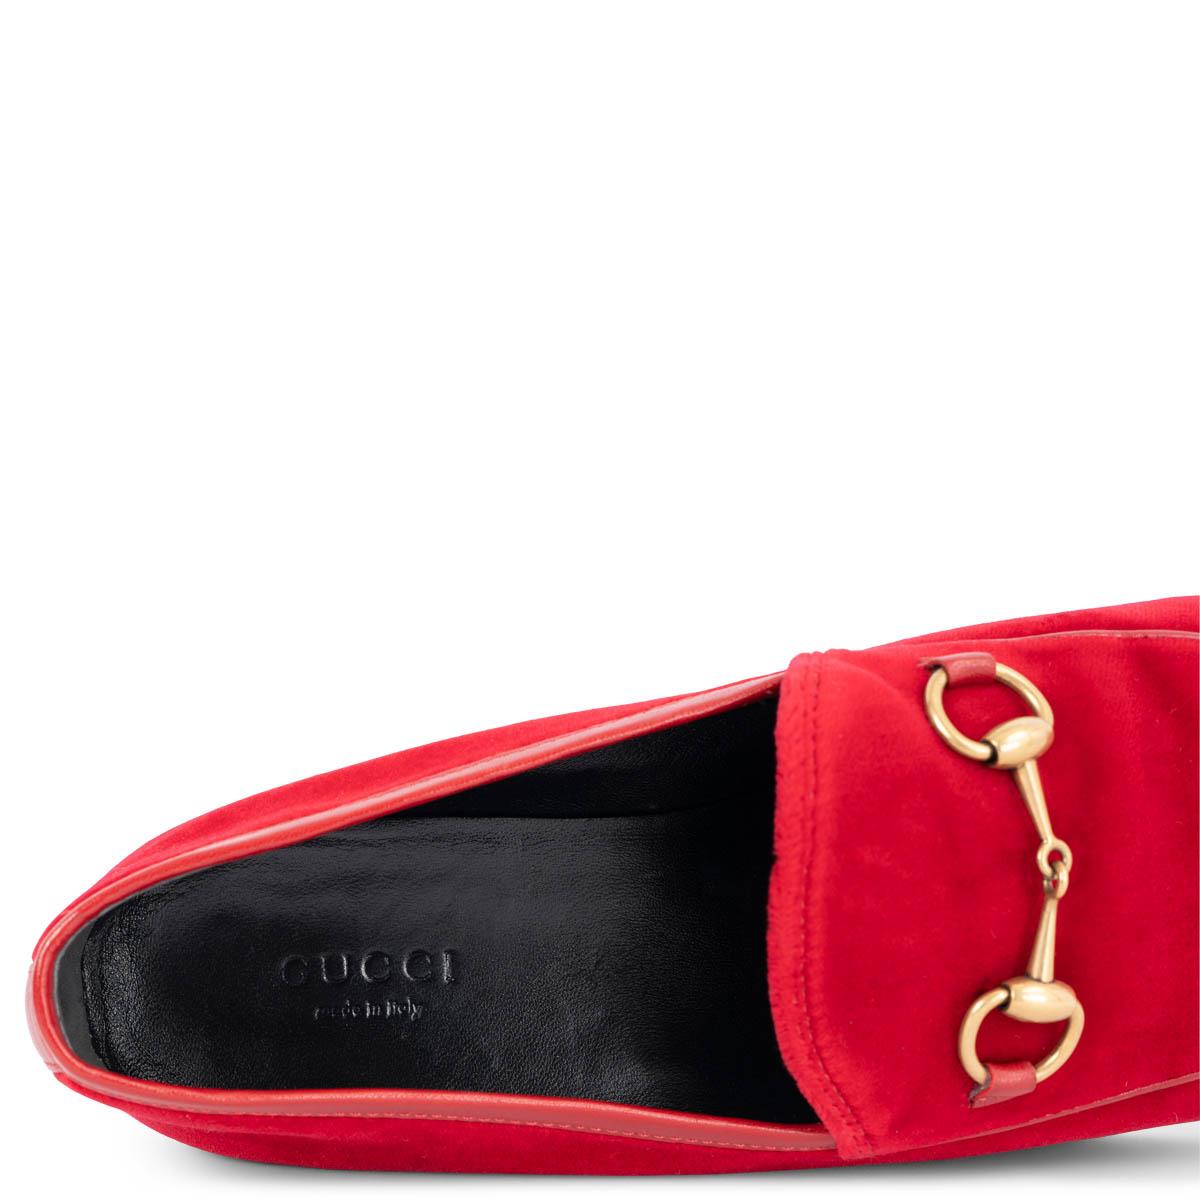 GUCCI red velvet JORDANN HORSEBIT Loafers Flats Shoes 38 2